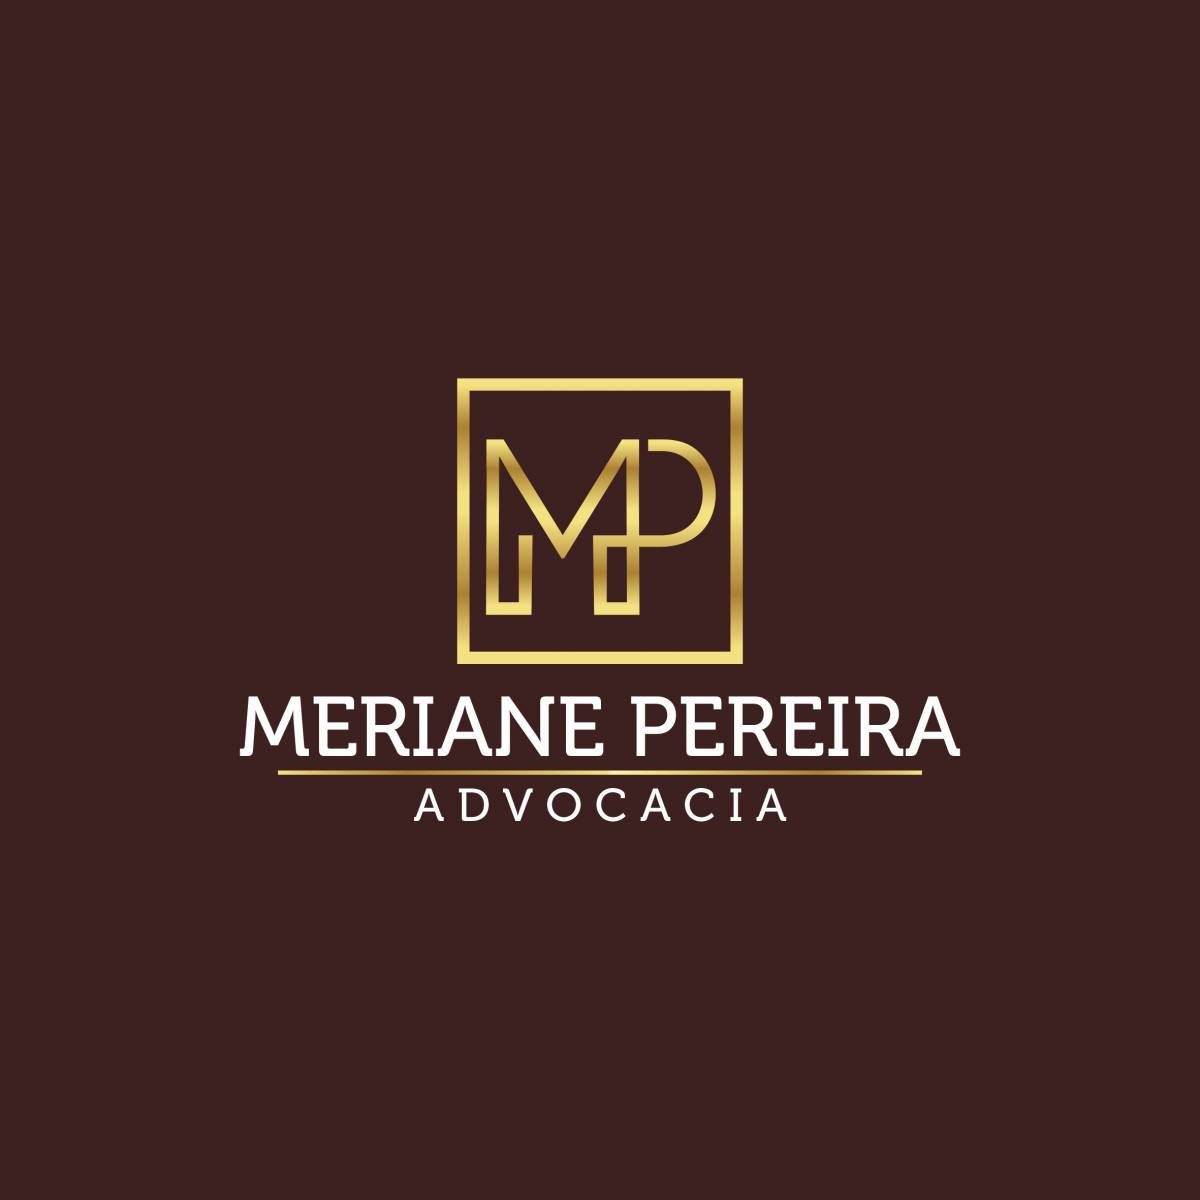 MERIANE PEREIRA - Faro - Advogado de Direito Civil